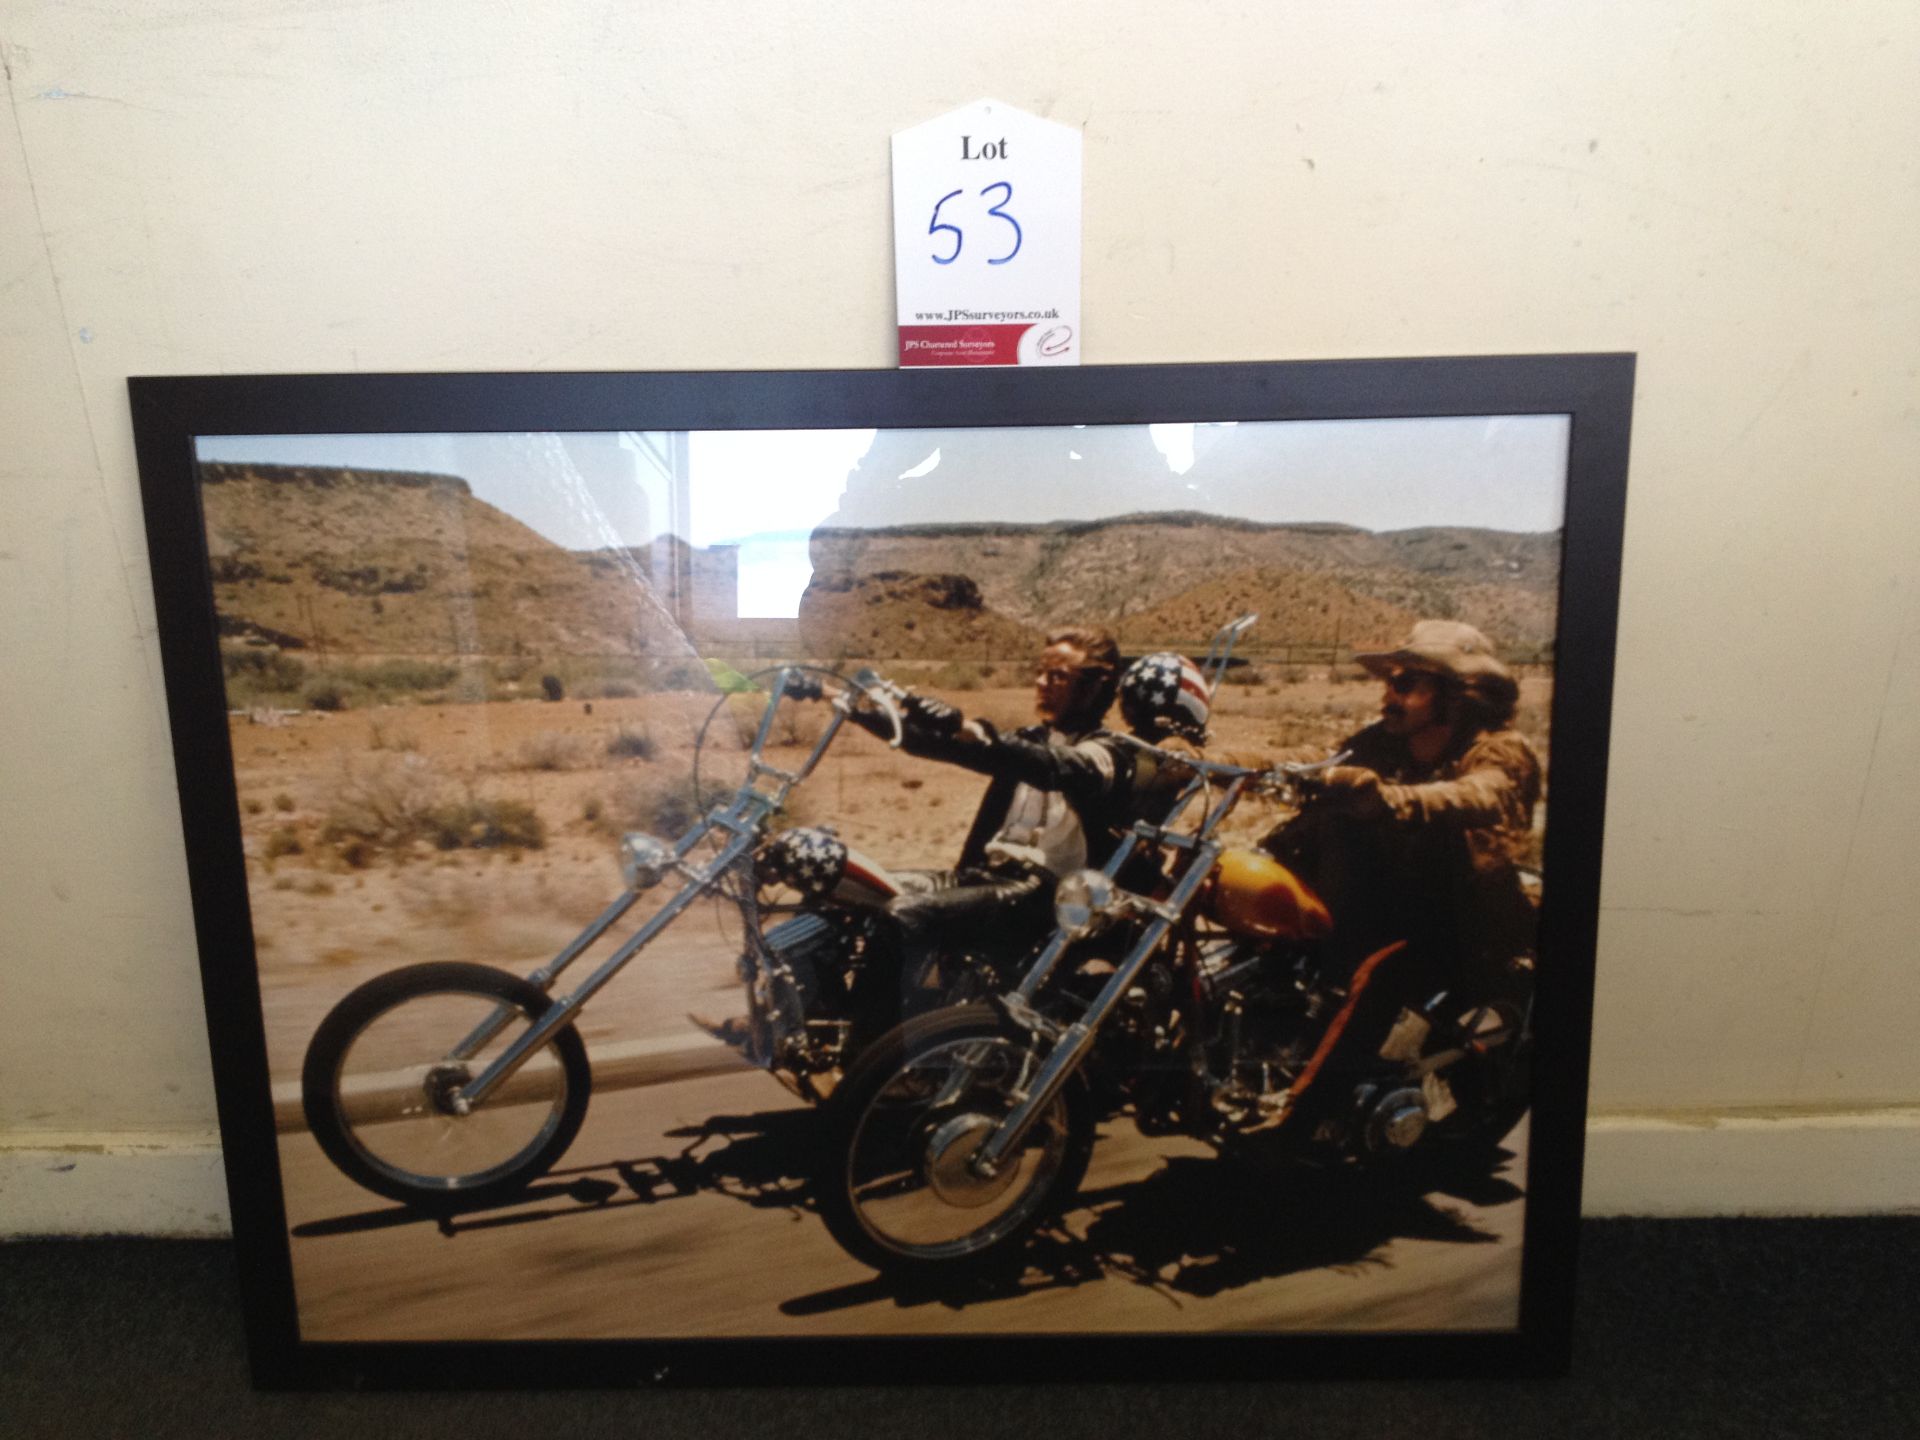 Easy Rider Framed Print Size: 87 x 66cm